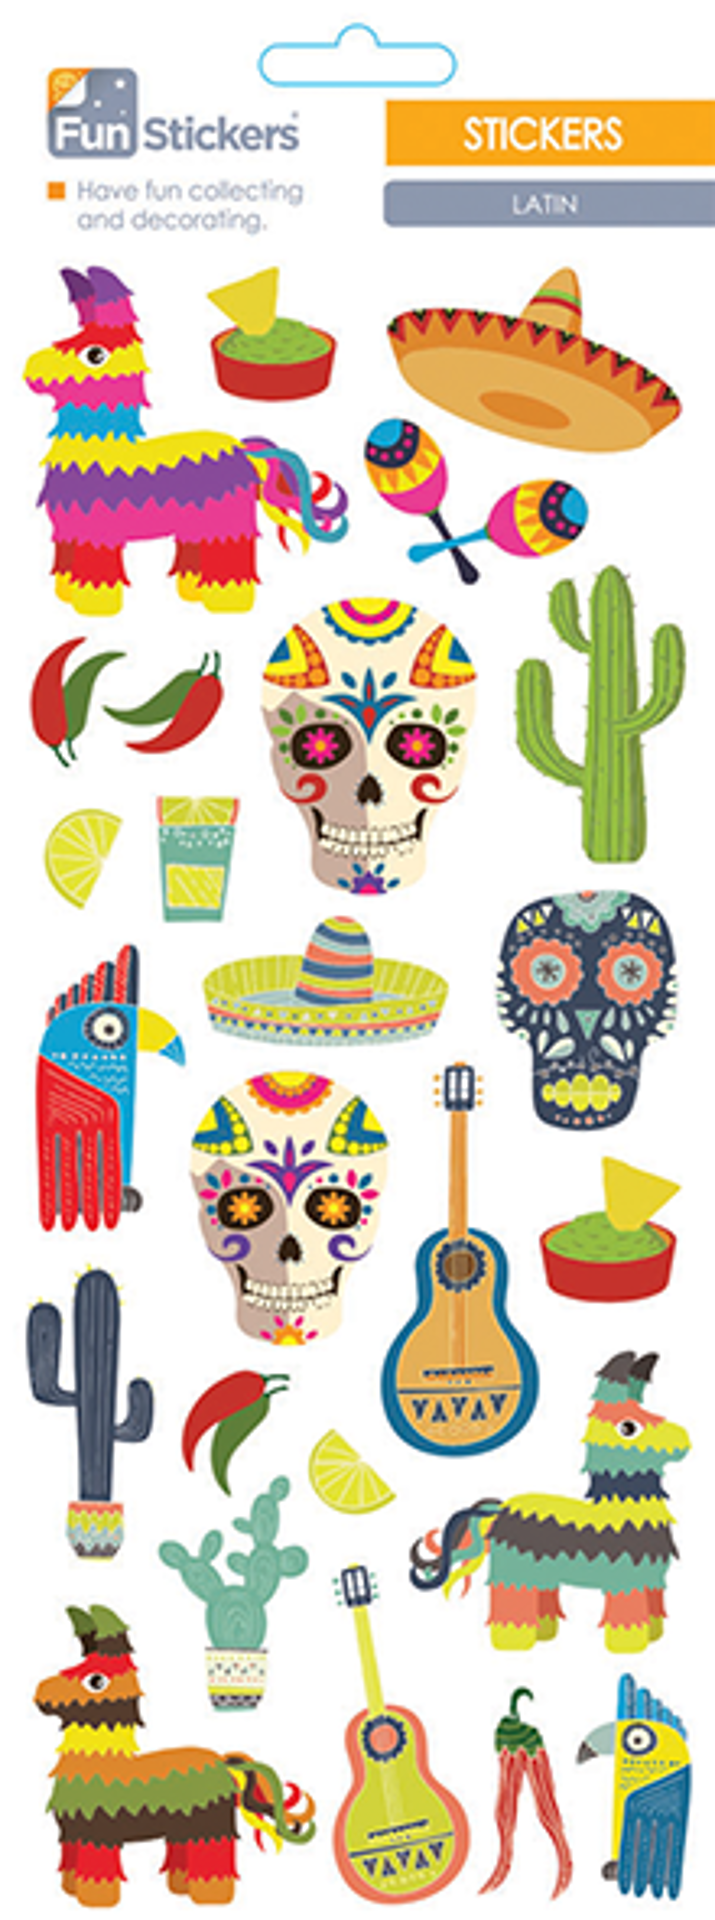 Latin Stickers